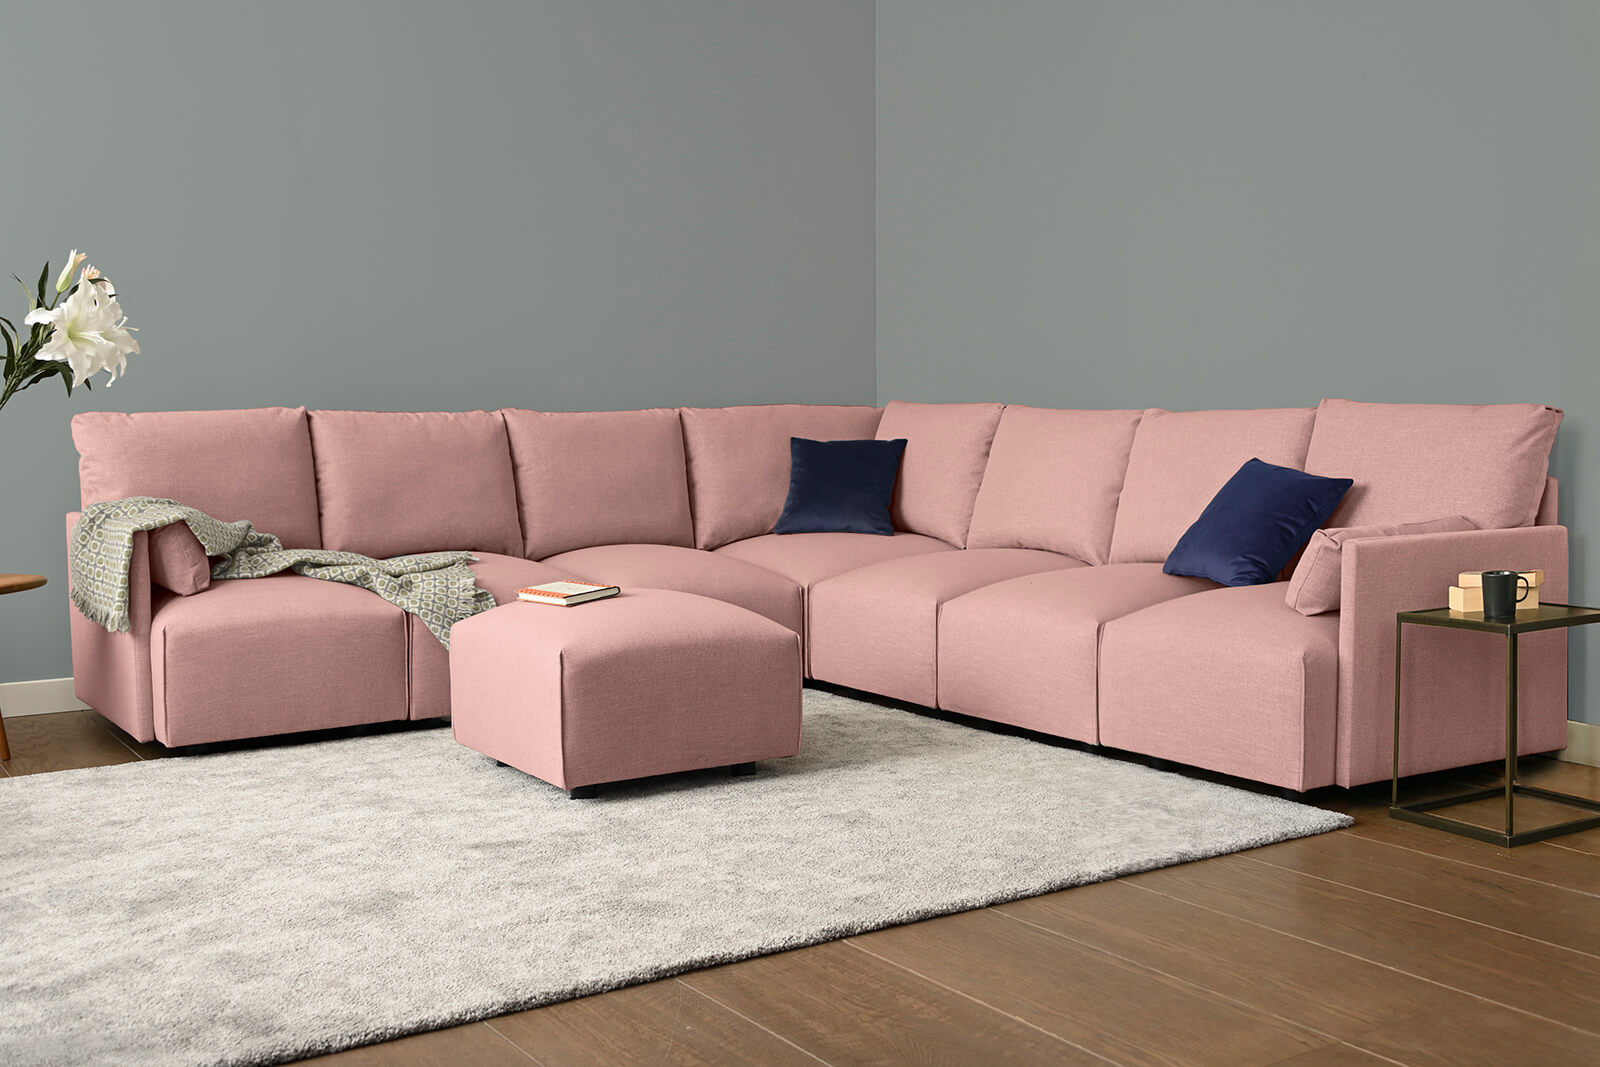 HB04-large-corner-sofa-footstool-3q-rosewater-4x4-lifestyle